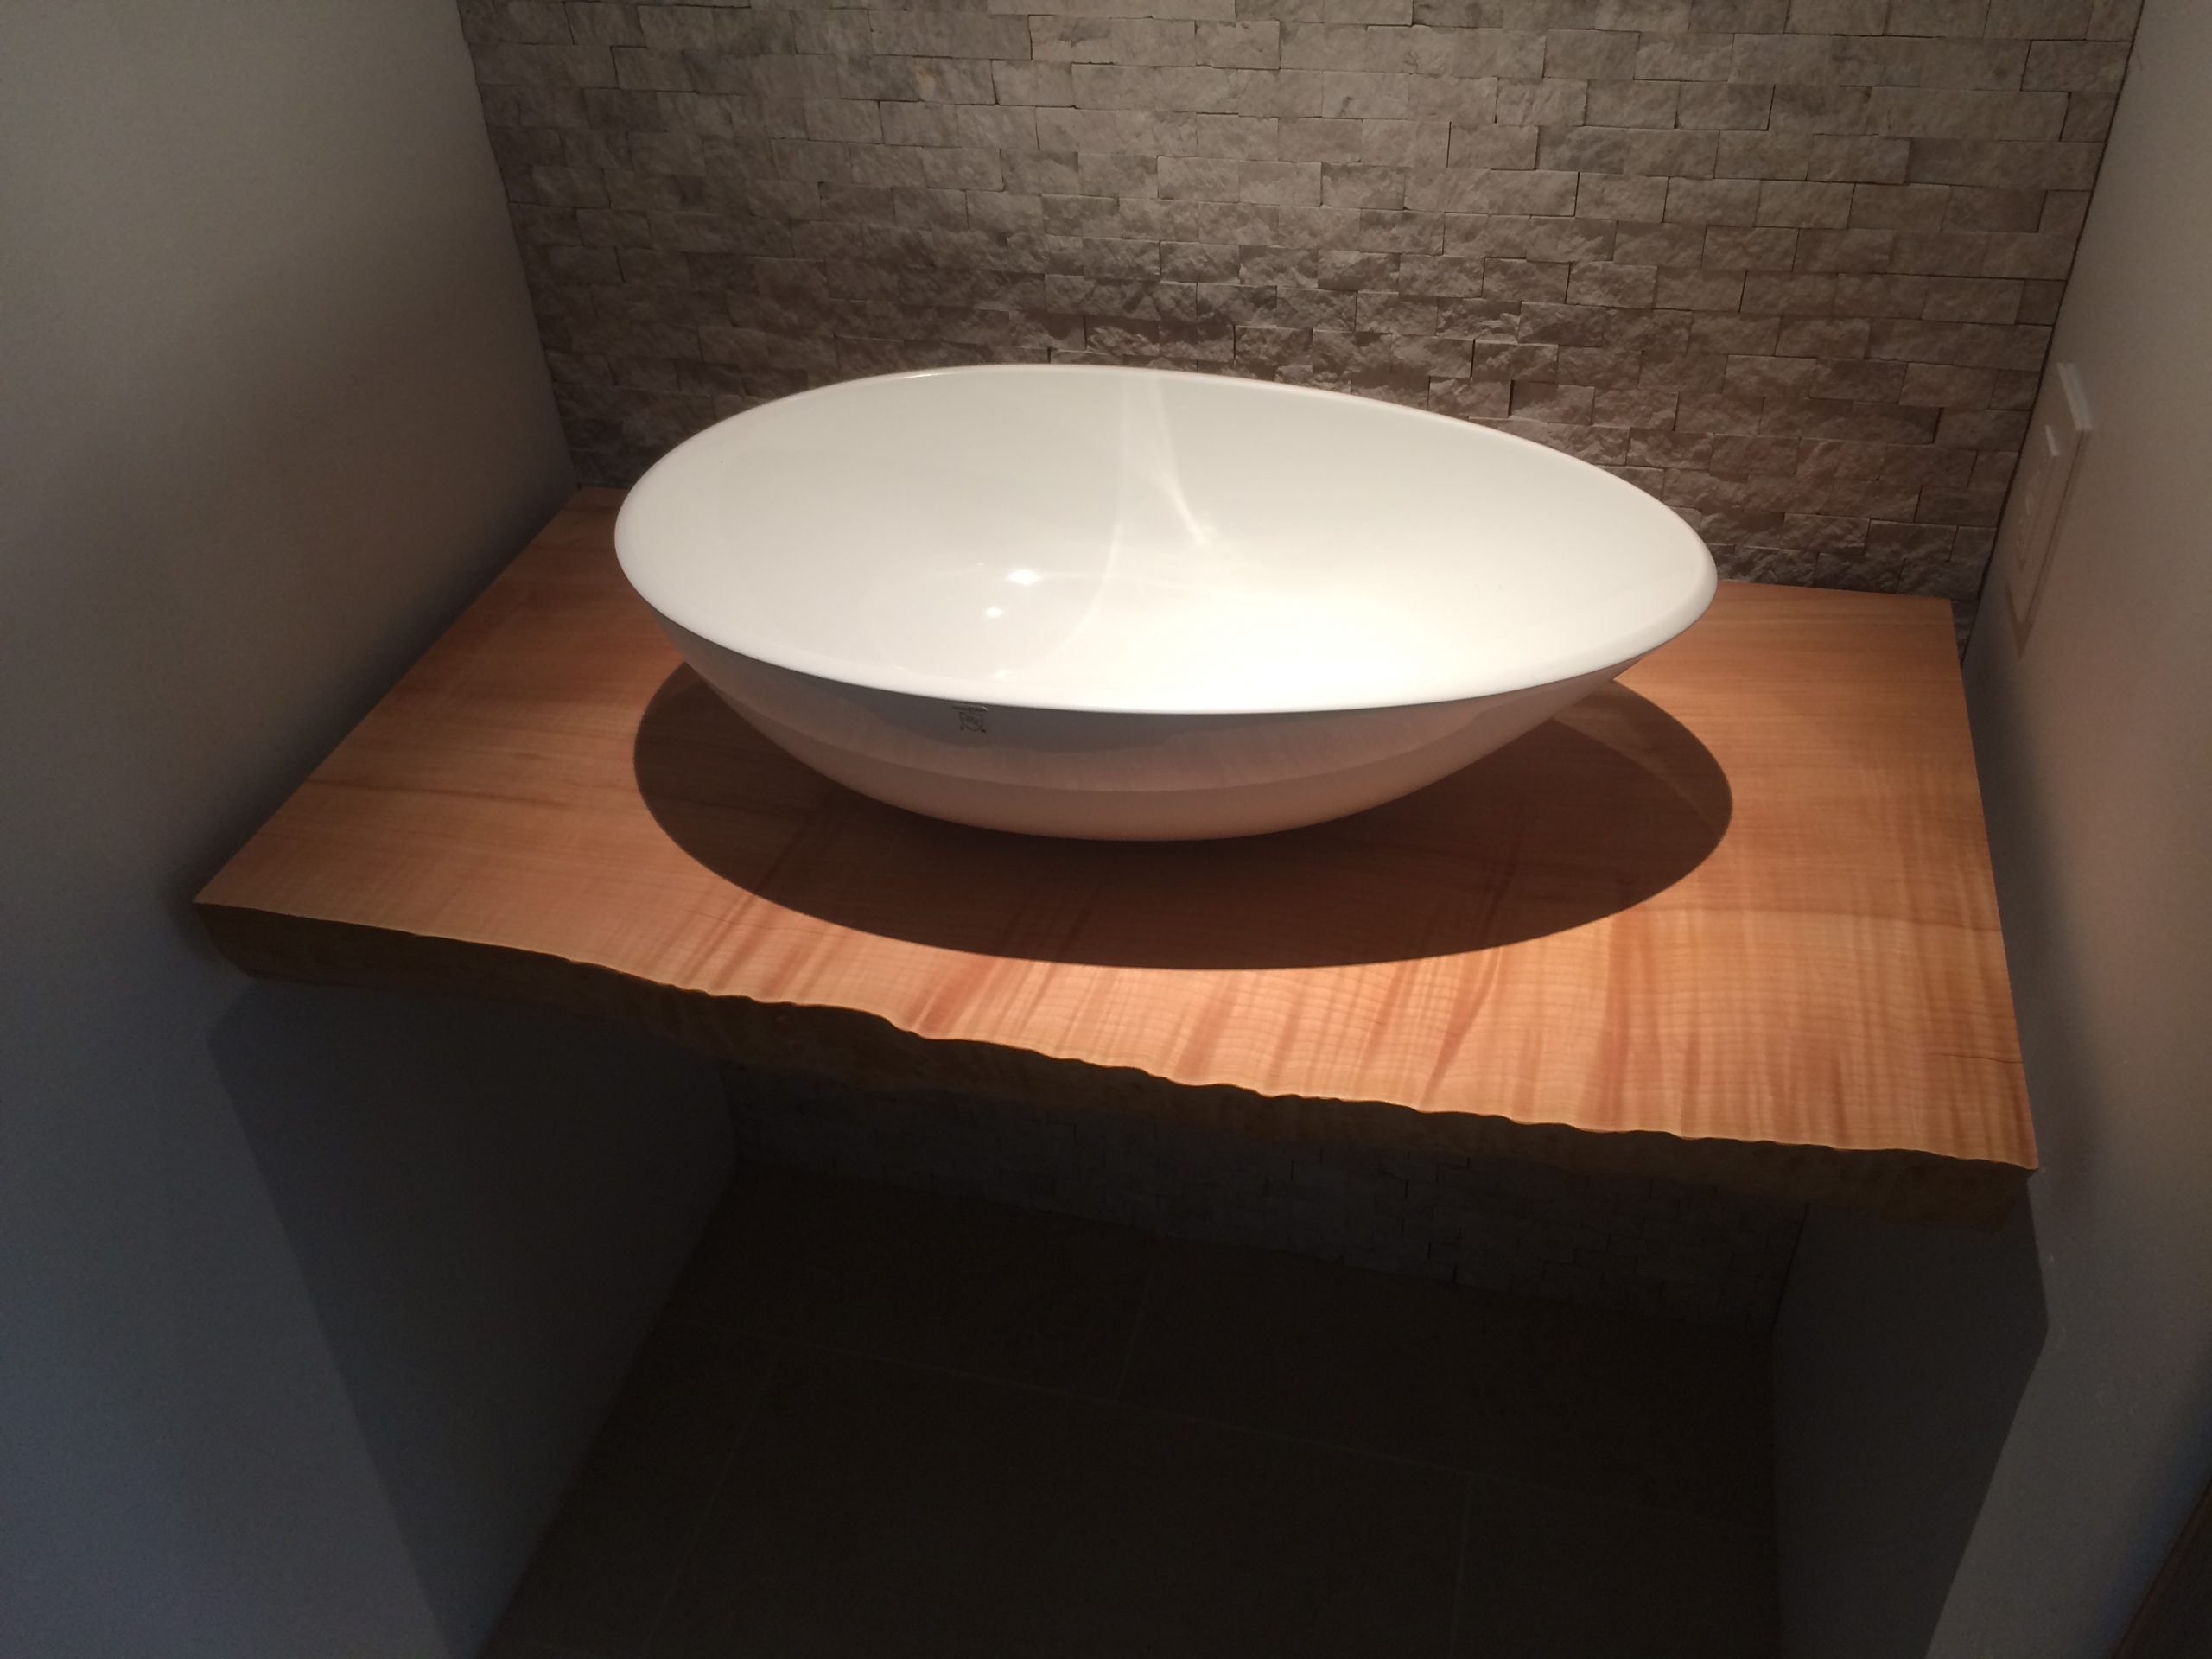 mw design workshop custom bathroom vanity